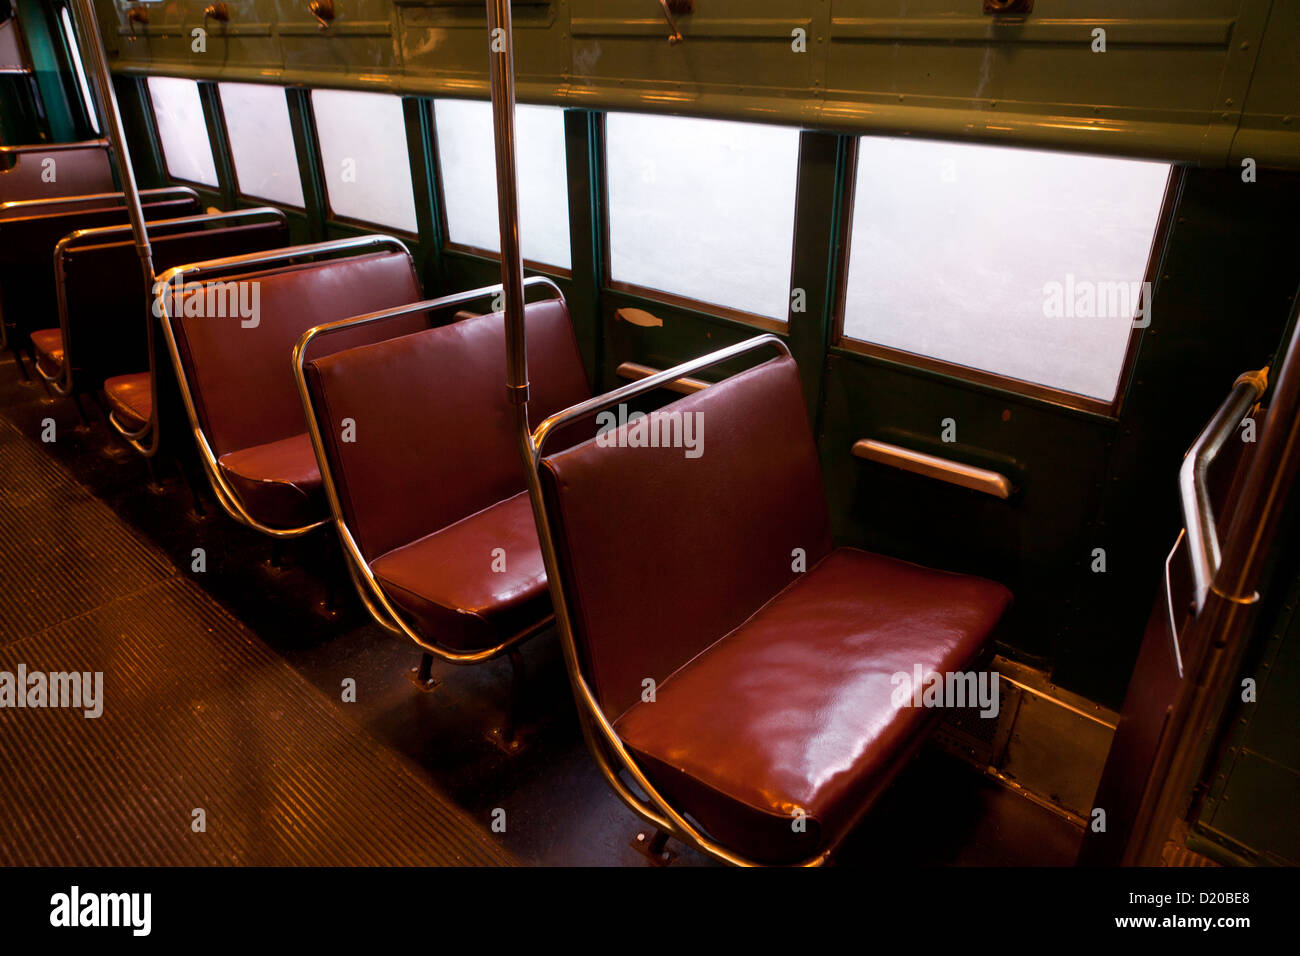 Vintage commuter train interior Stock Photo